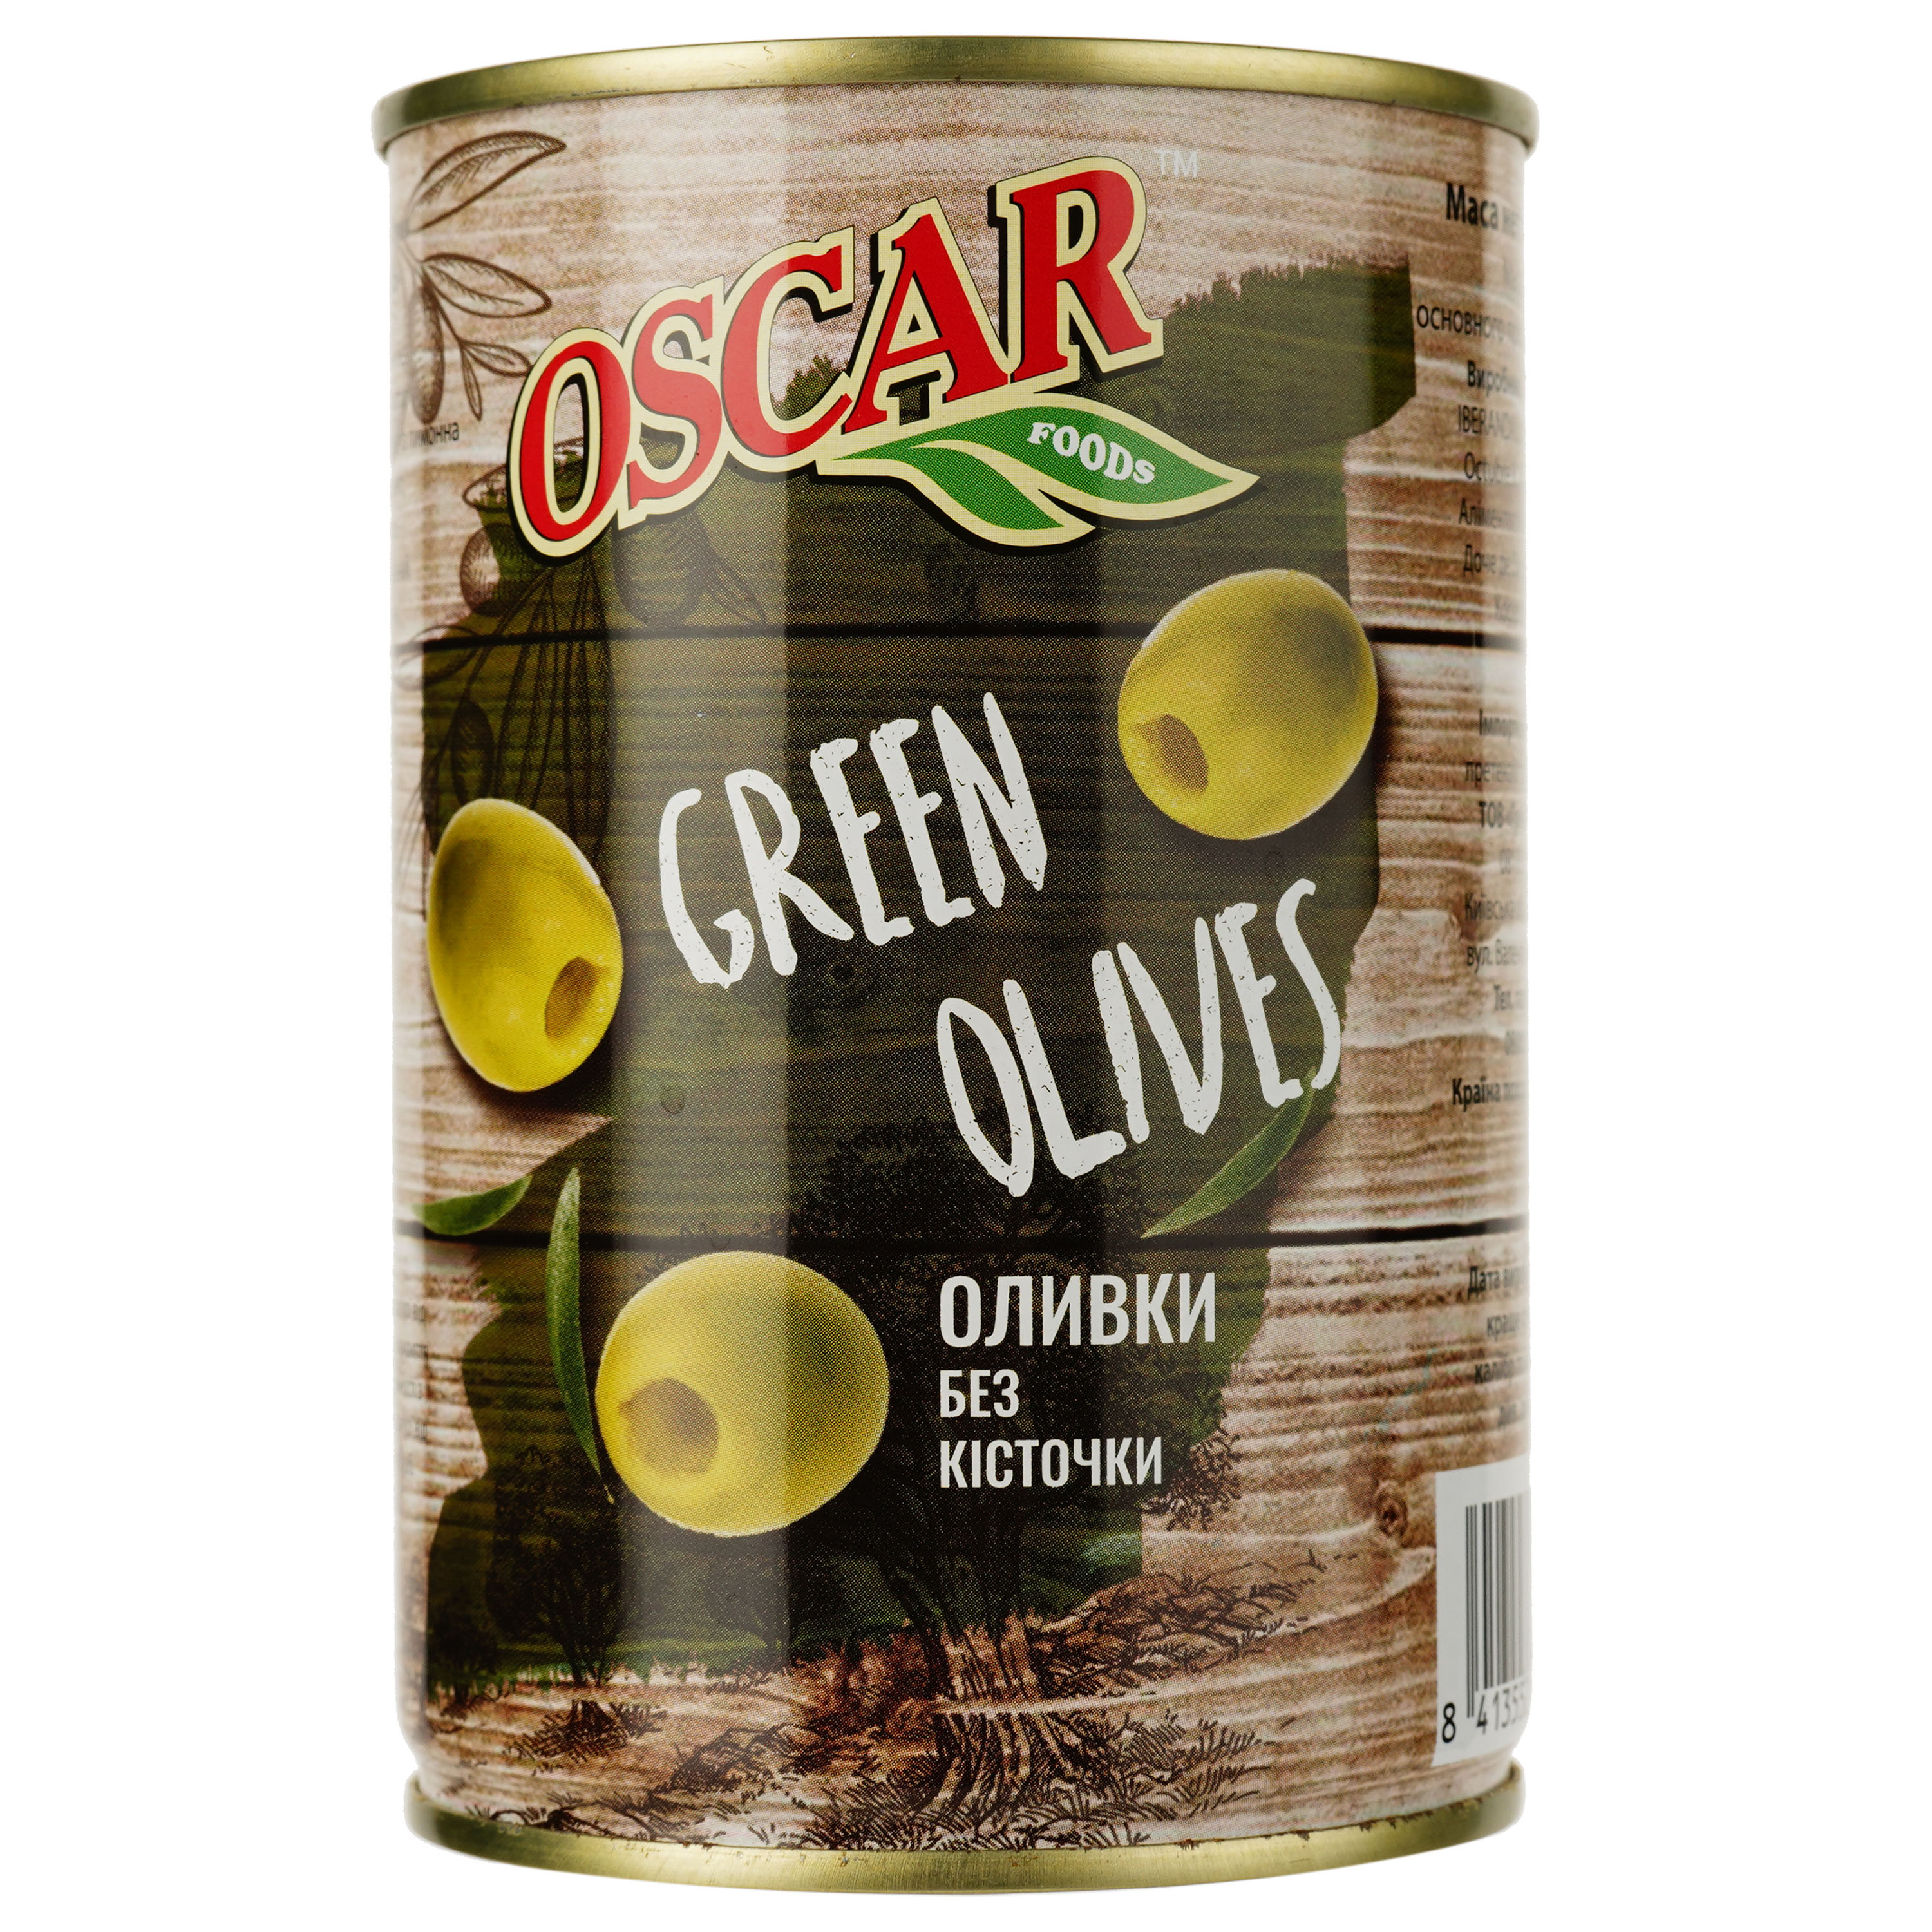 Оливки Oscar без косточки 400 г - фото 1